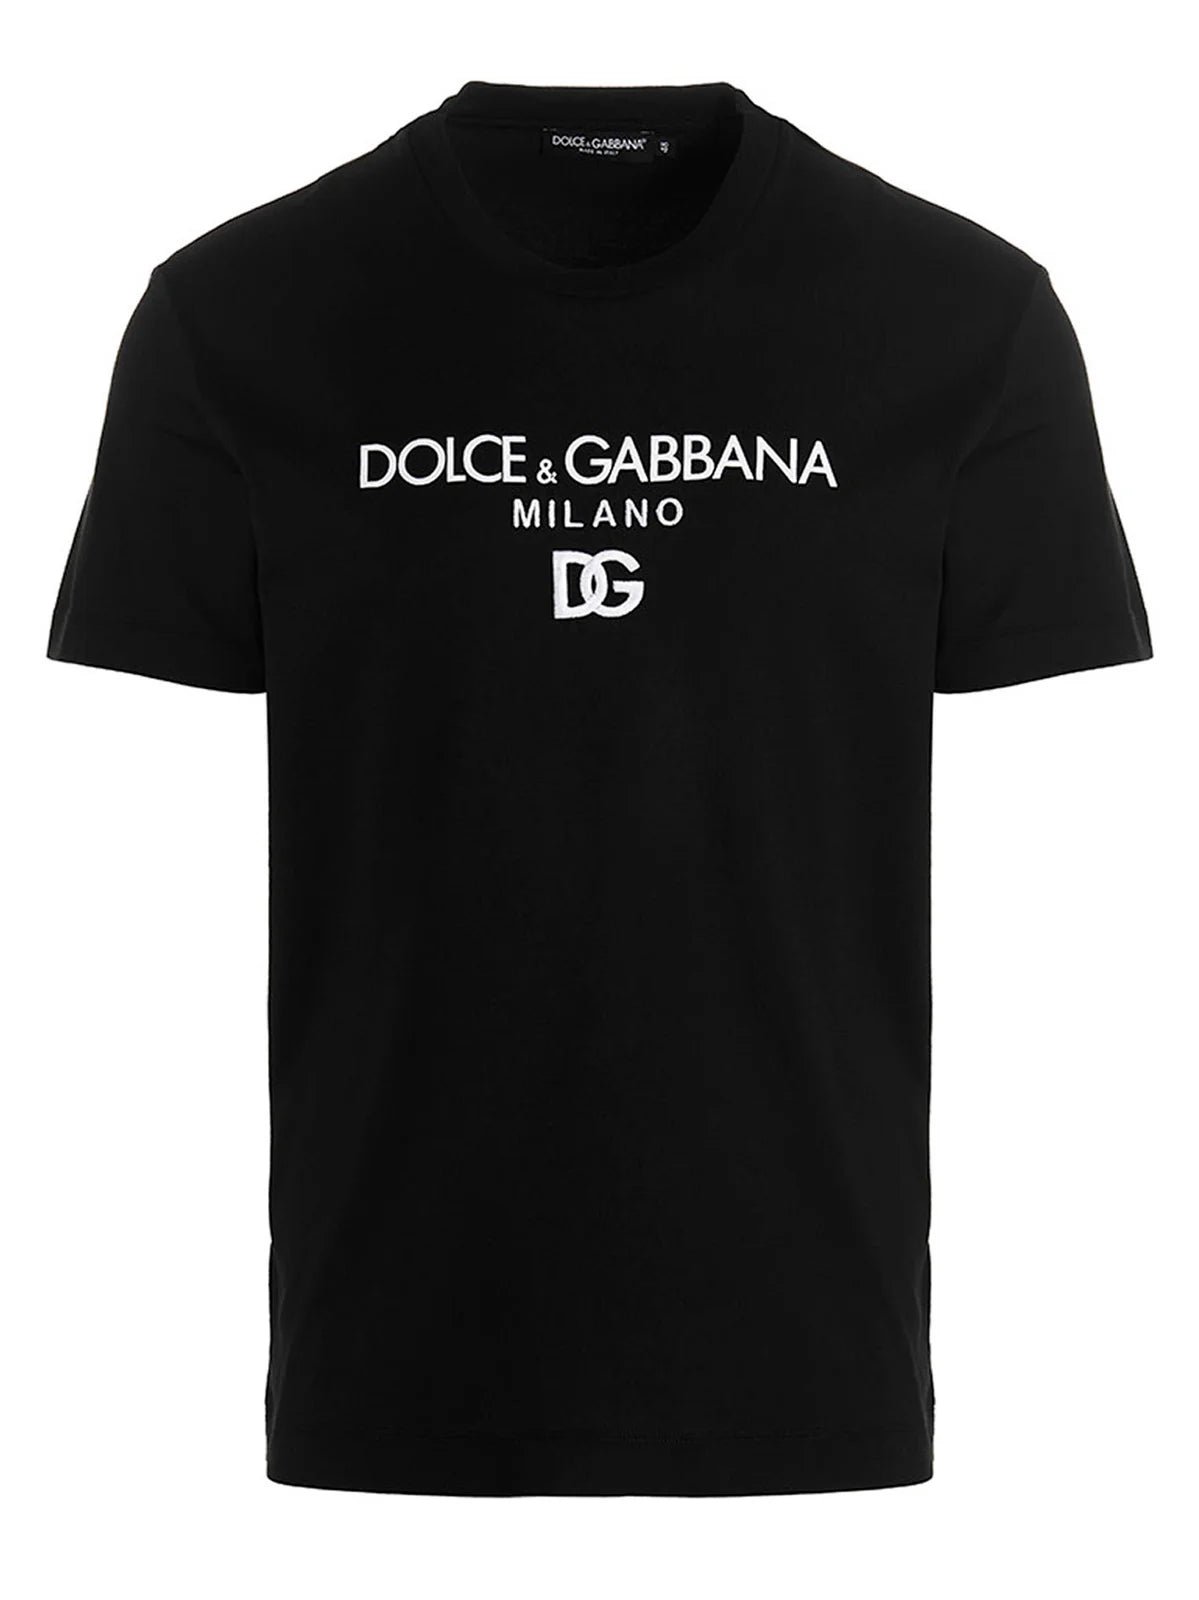 Dolce & Gabbana Embroidered DG Milano Logo T-Shirt in Black